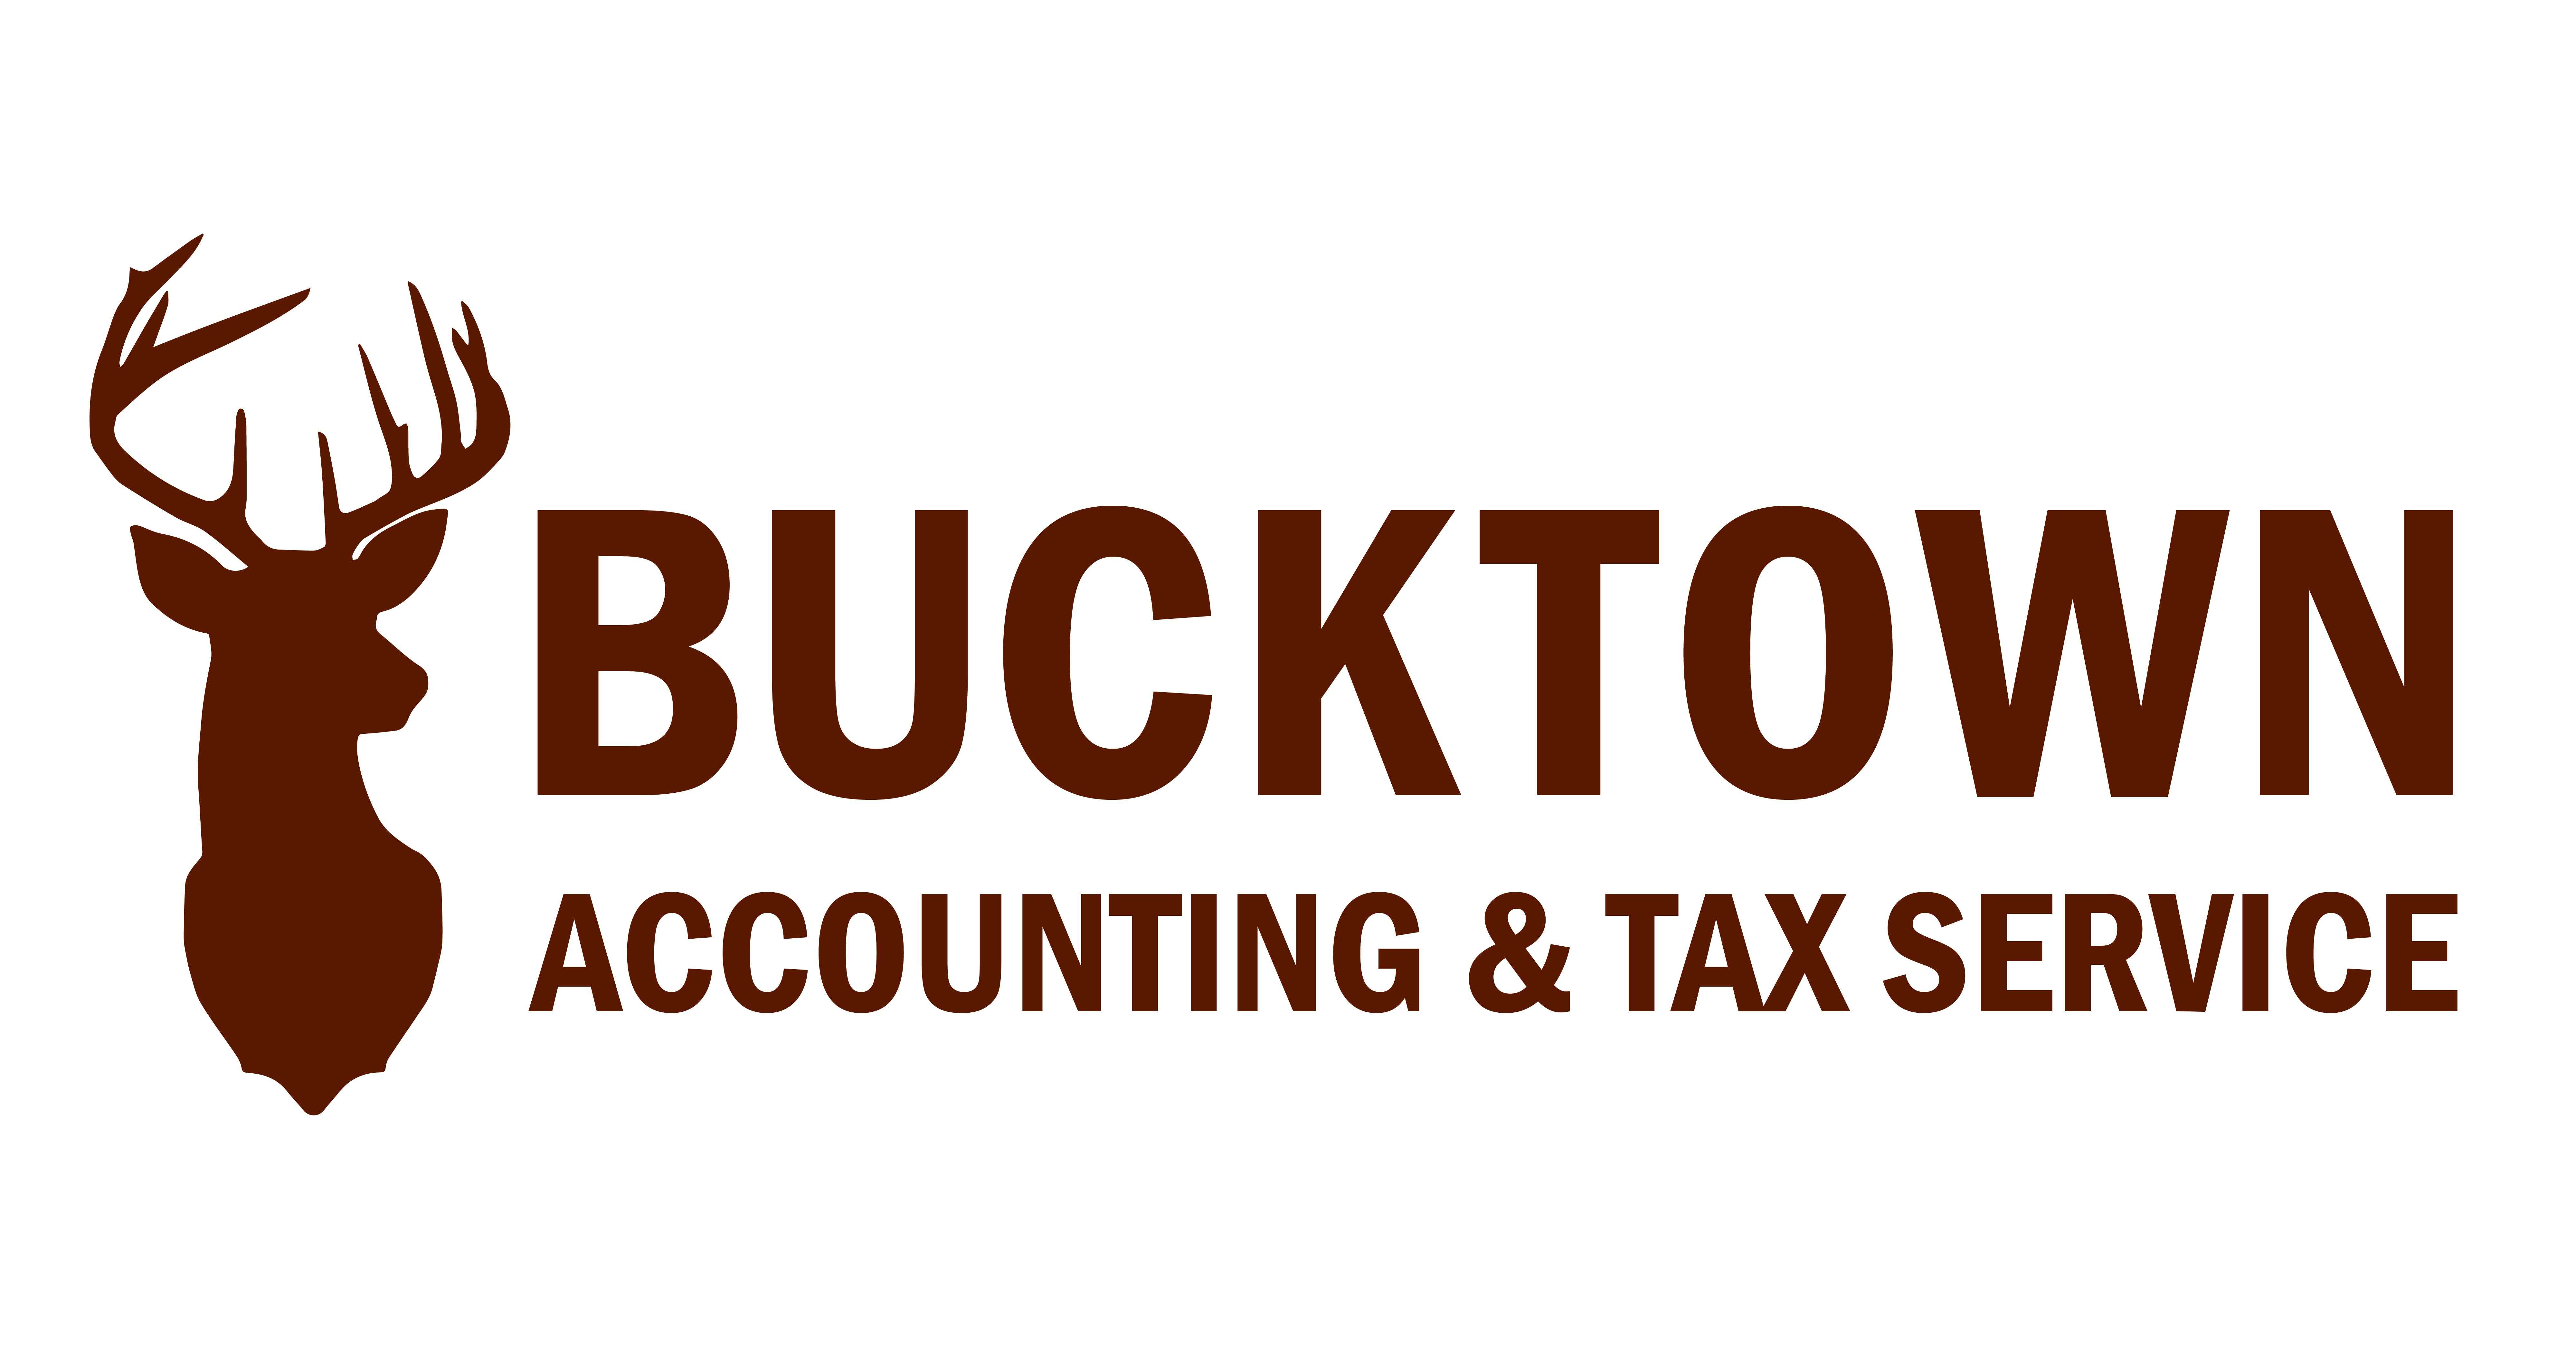 bucktown accounting services-01.jpg